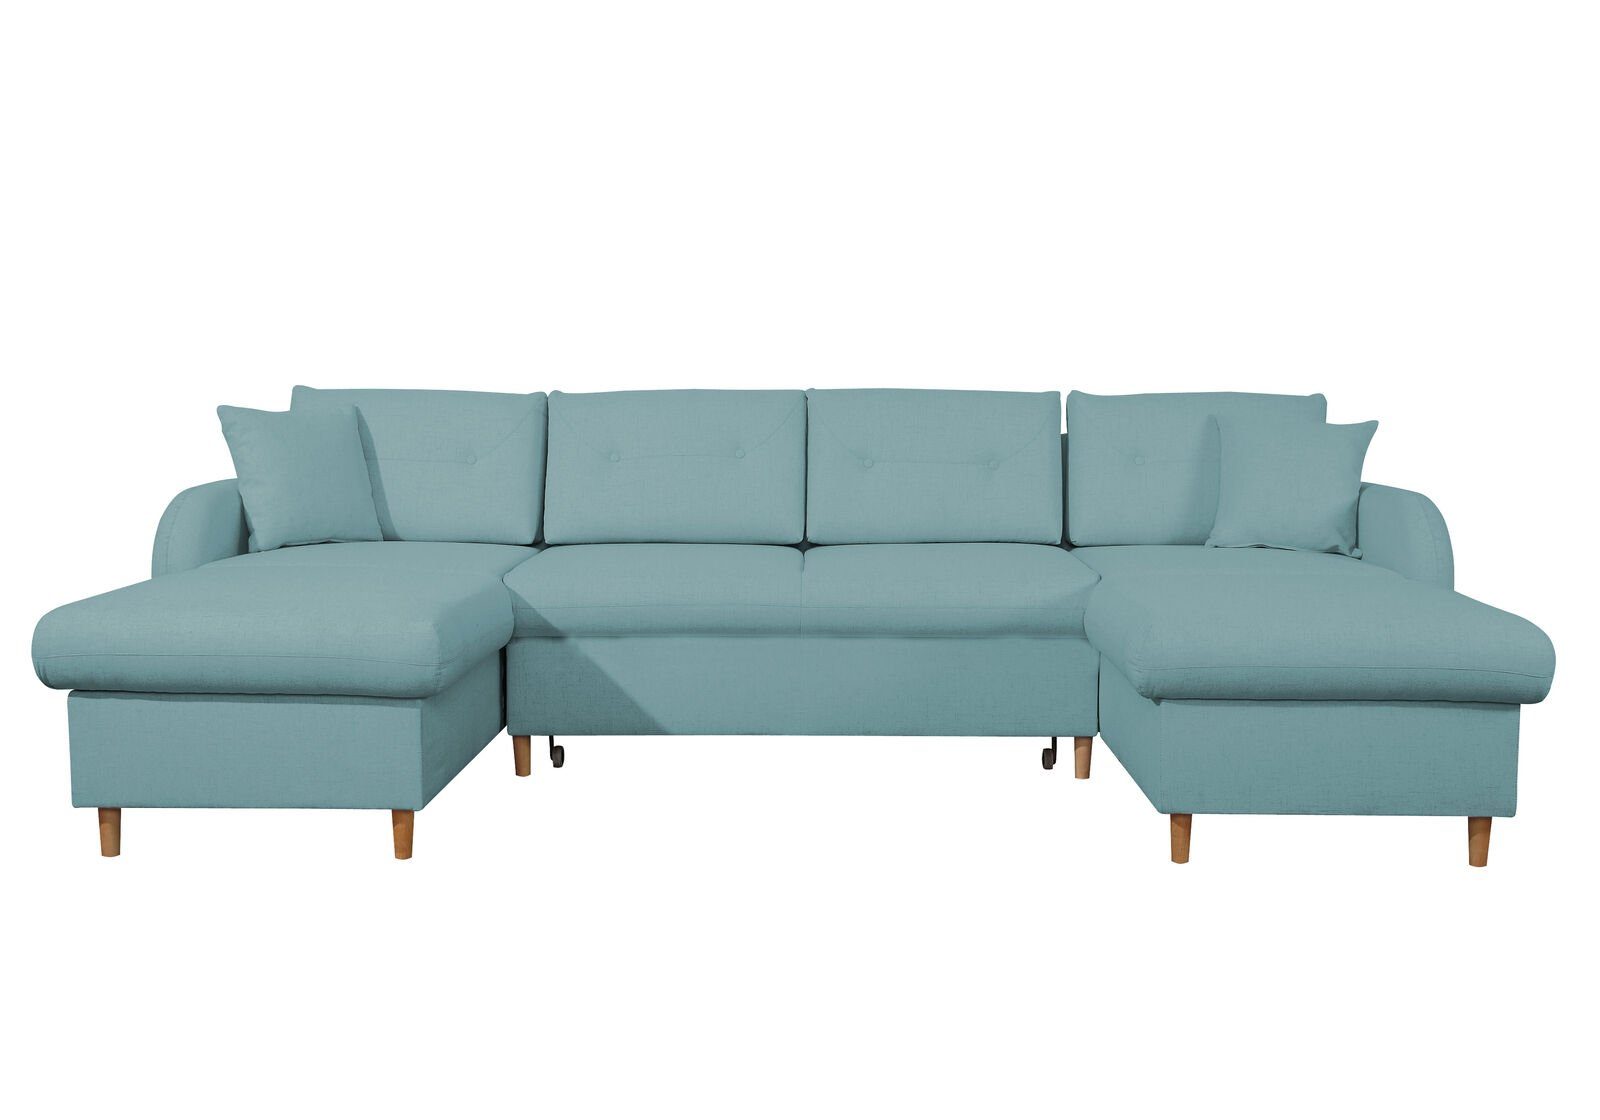 JVmoebel Ecksofa Wohnlandschaft Ecksofa Couch Bettfunktion Europe U-Form Stoff Blau in Made Design